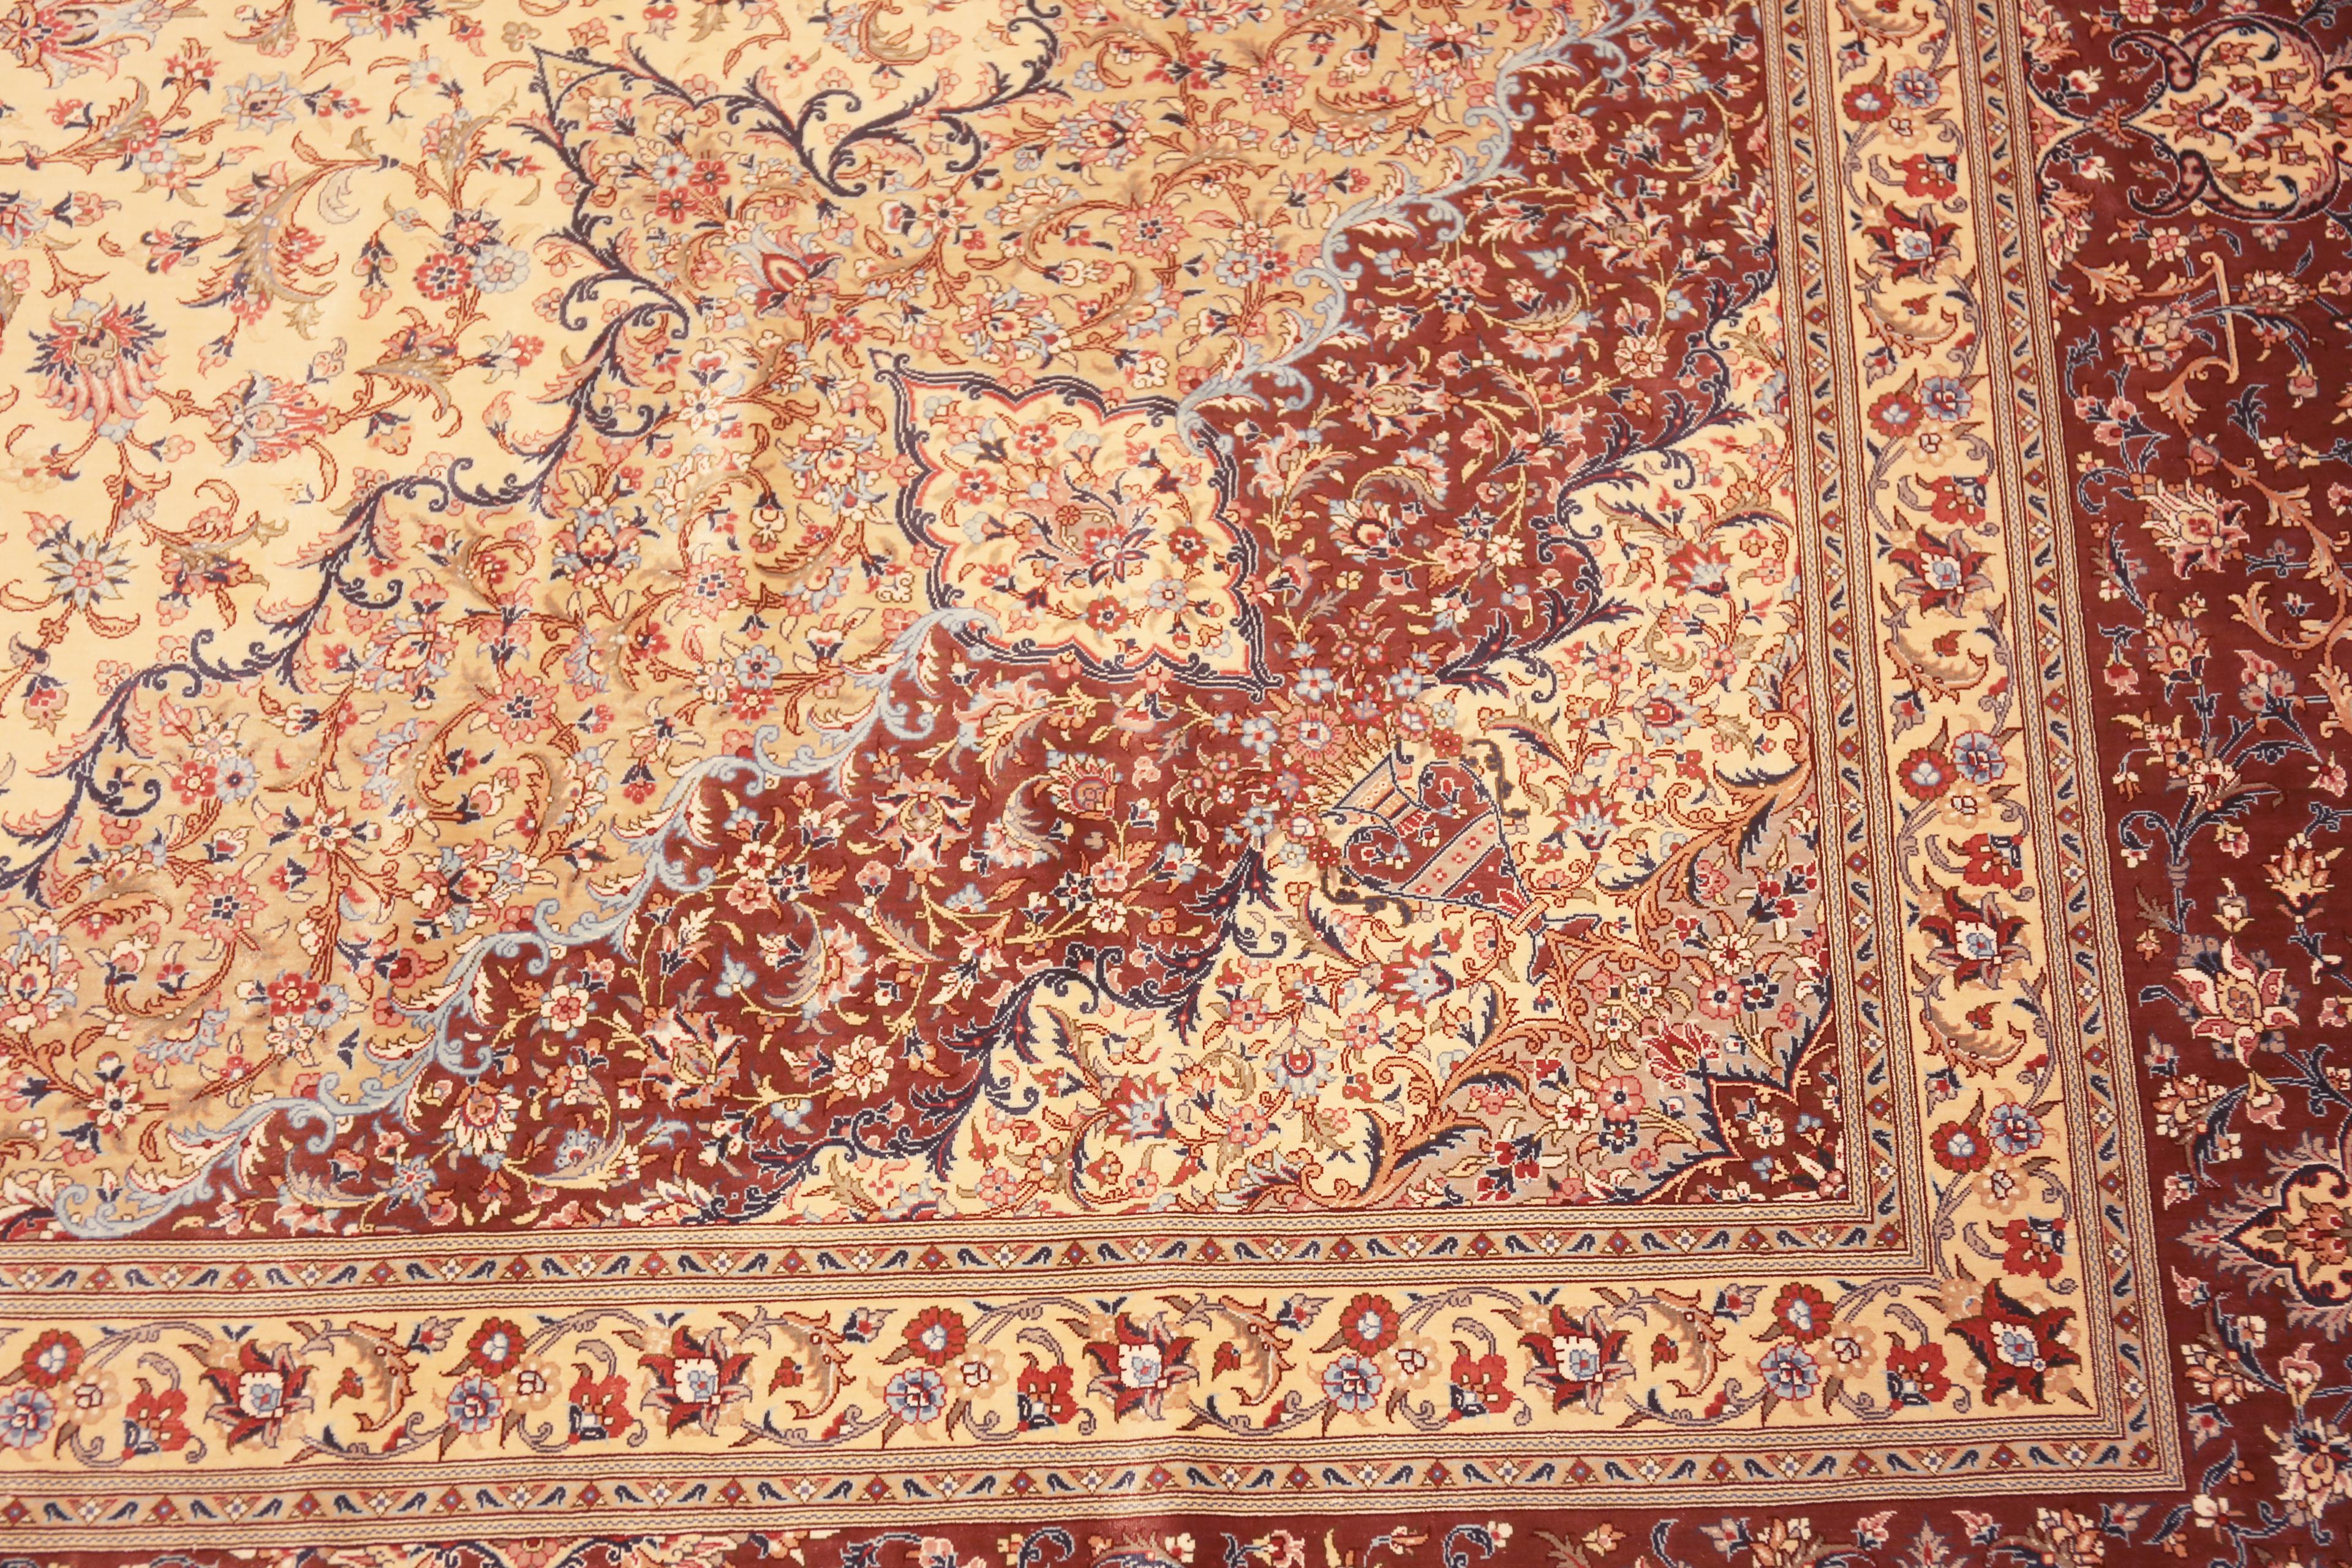 Fine Room Size Vintage Persian Luxury Gonbad Design Silk Qum Rug 10' x 13'8